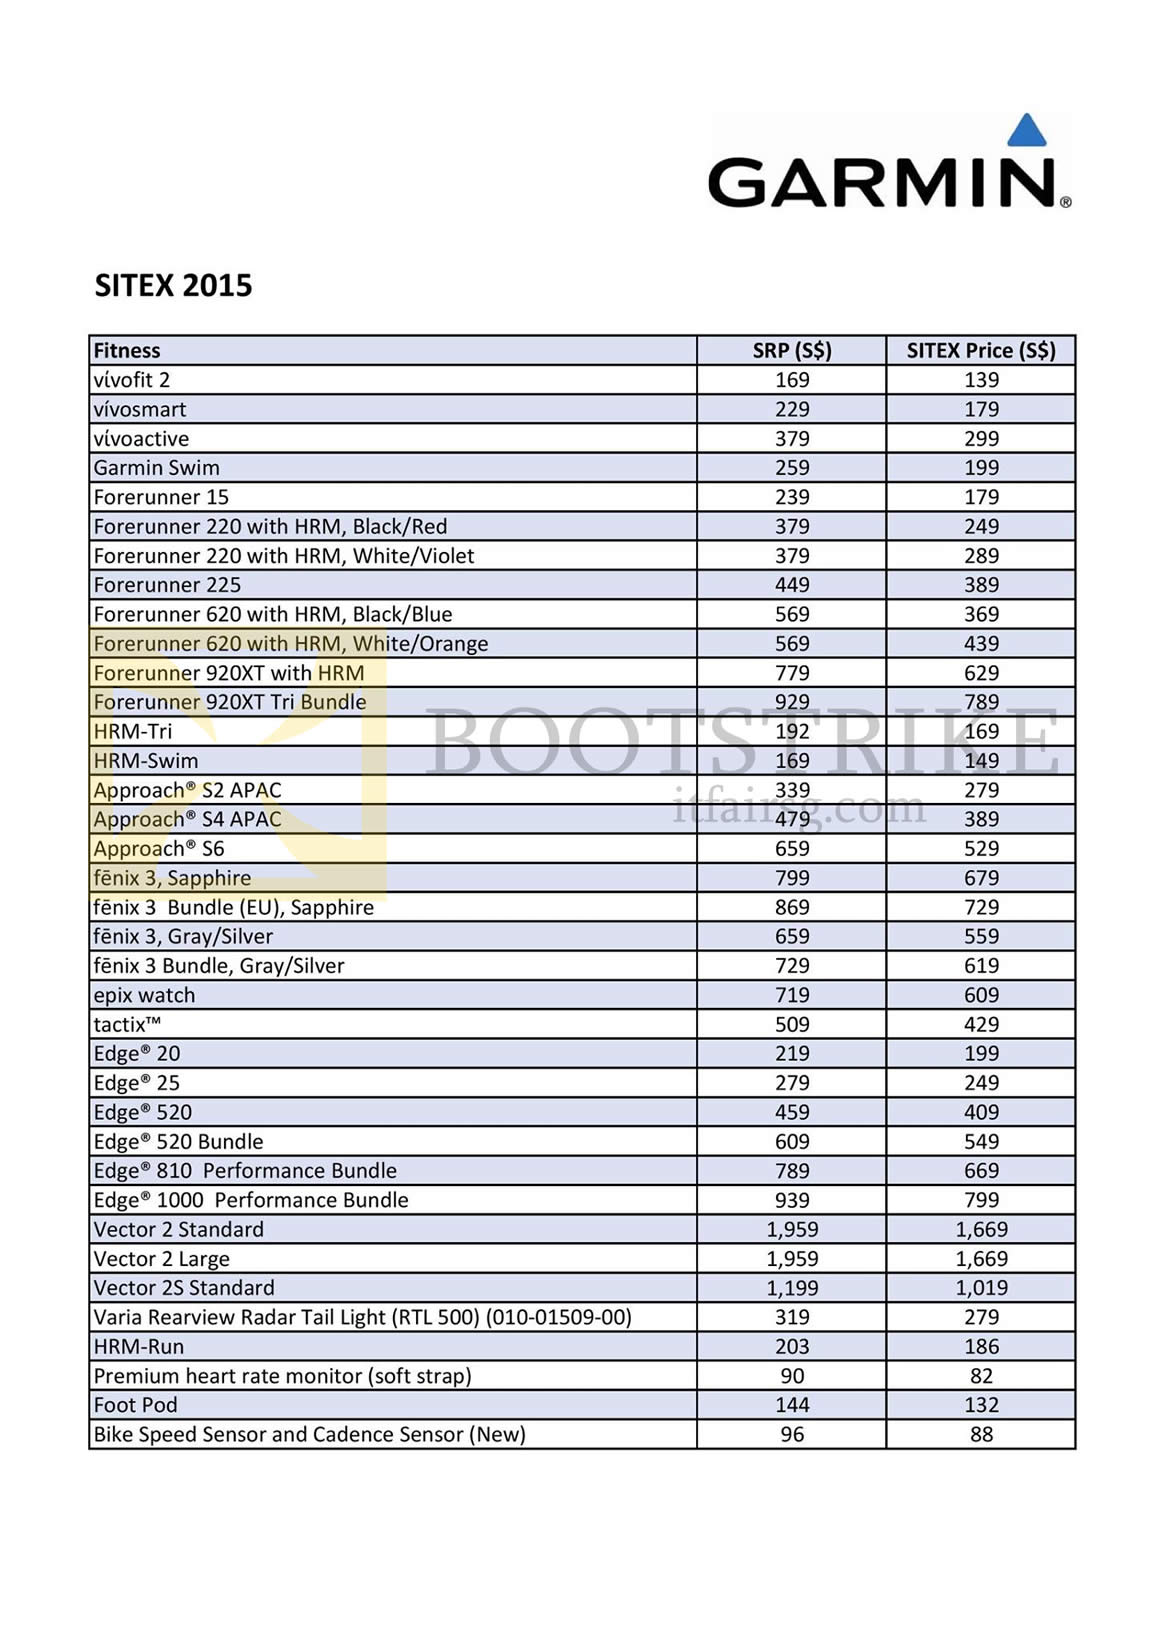 SITEX 2015 price list image brochure of Navicom Garmin Sitex And Retail Price Comparison List, Fitness